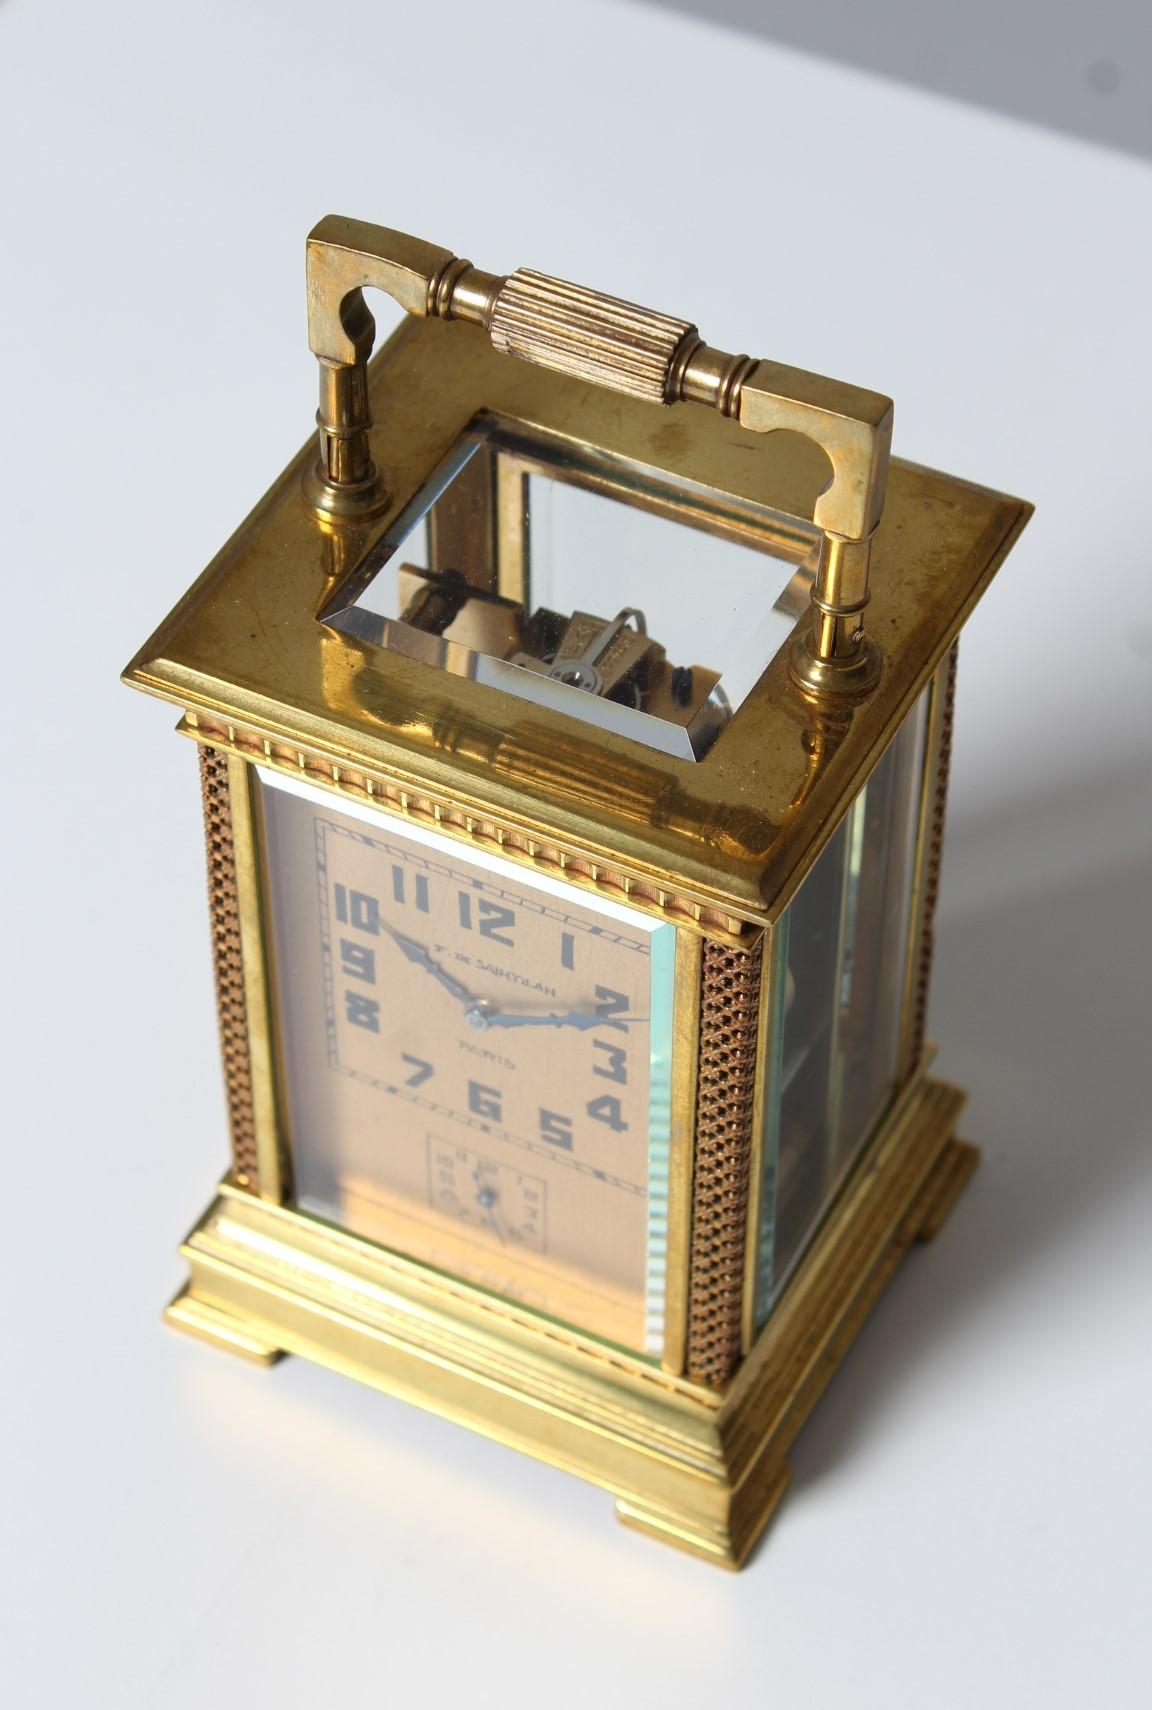 Early 20th Century Art Deco Travel Clock with Alarmfunction, Paris, 1920s-1930s